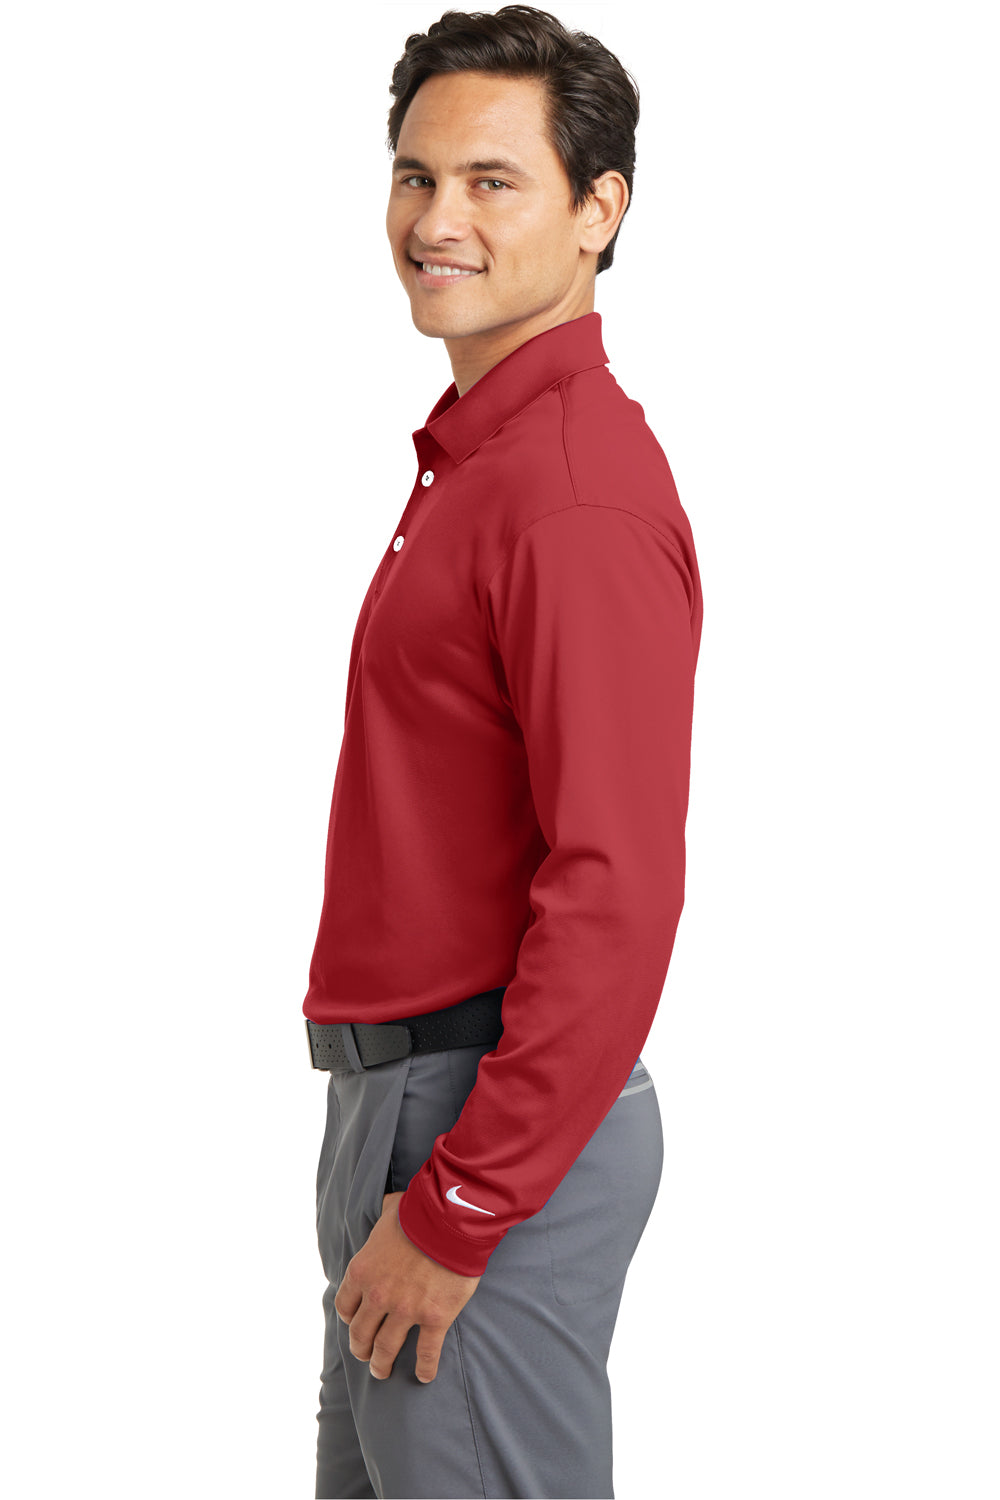 Nike 466364/604940 Mens Stretch Tech Dri-Fit Moisture Wicking Long Sleeve Polo Shirt Varsity Red Model Side